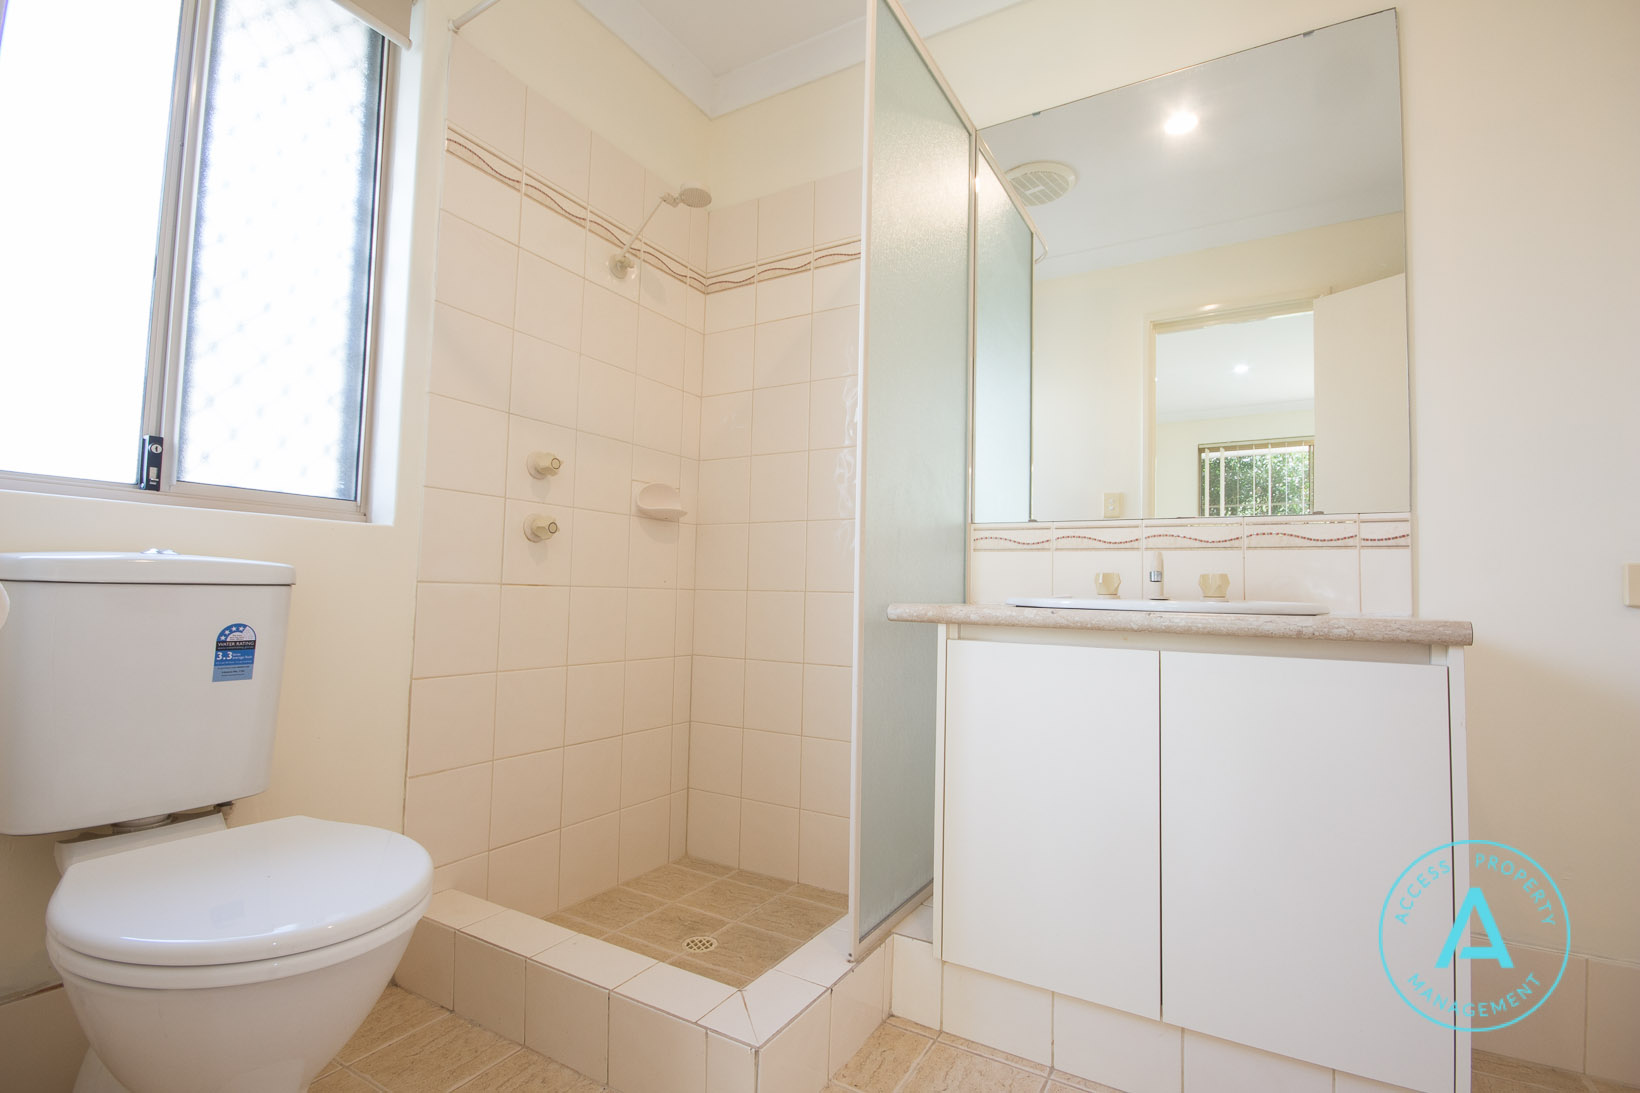 Access Property Management 28, Abingdon Crescent Bathroom